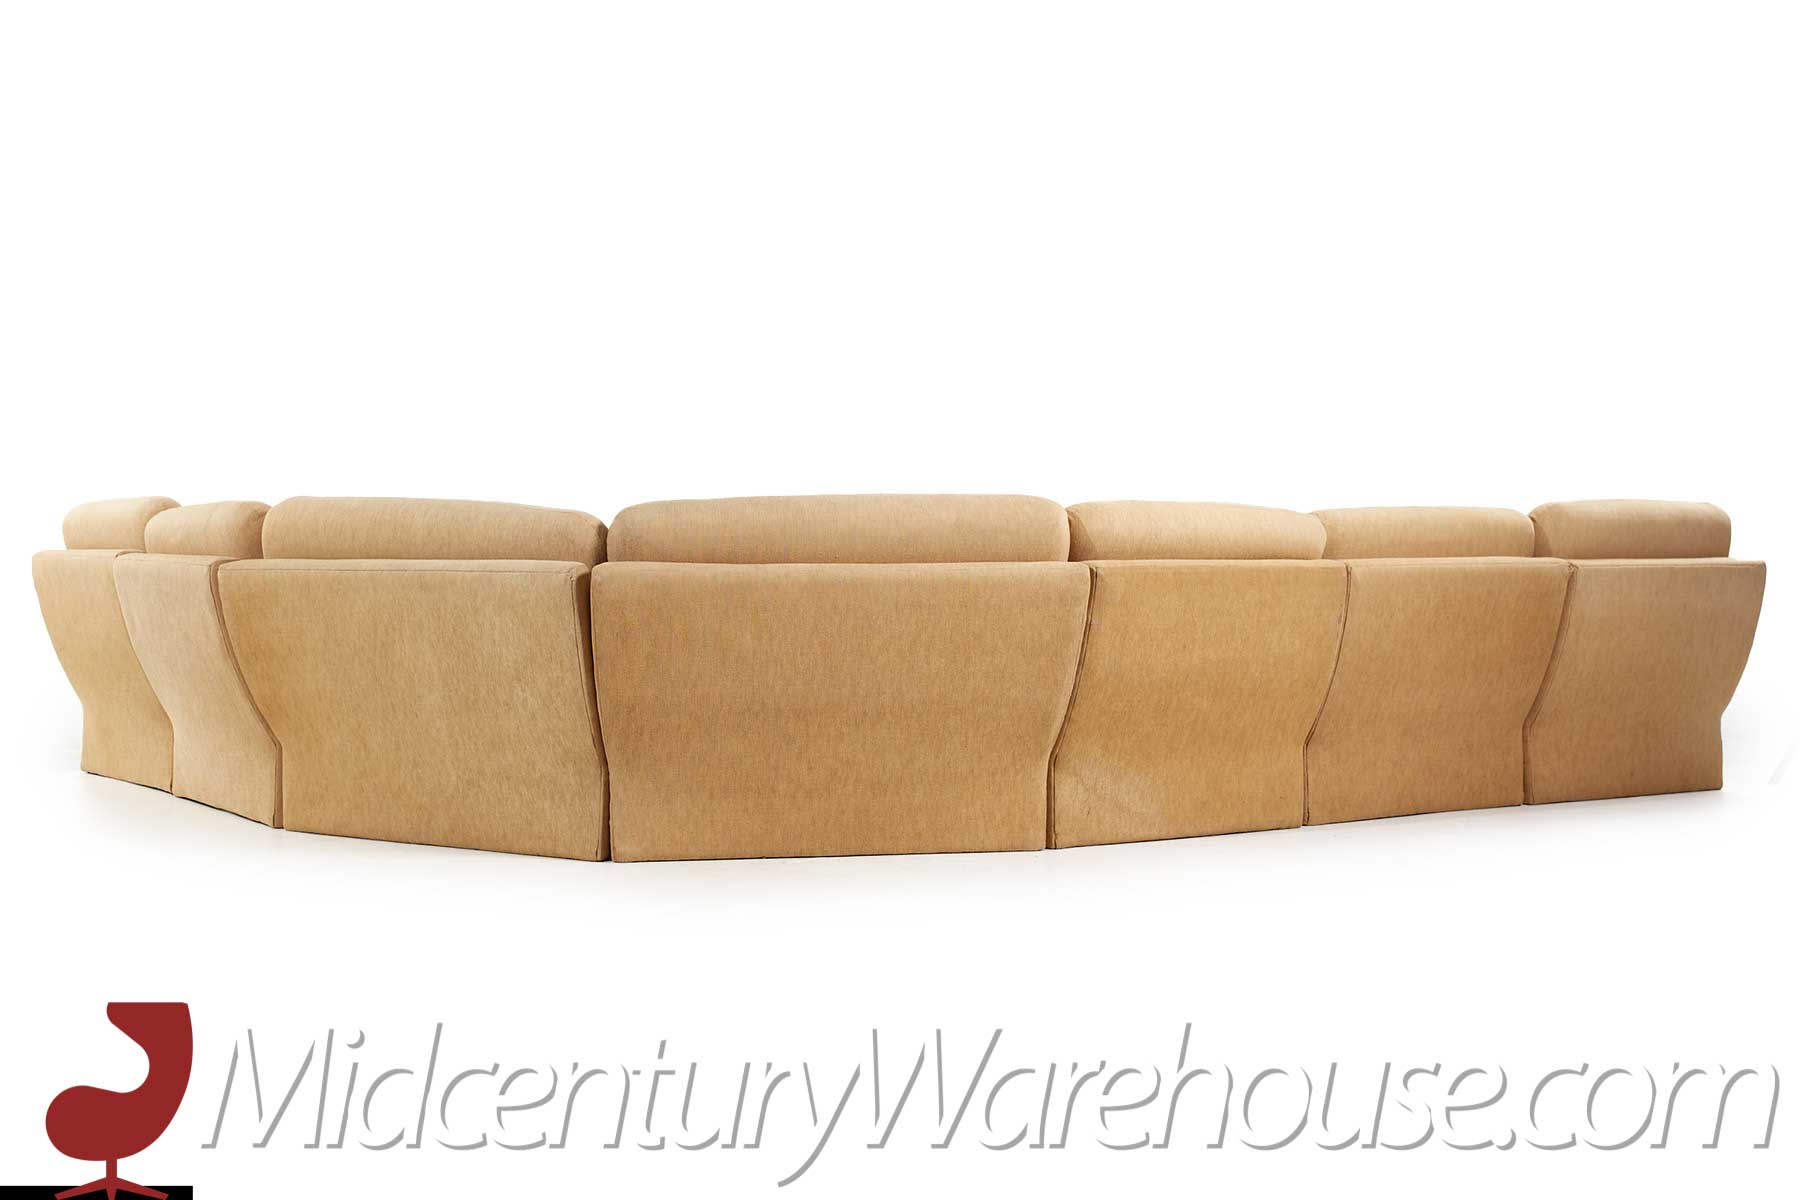 Vladimir Kagan Style Mid Century Sectional Sofa